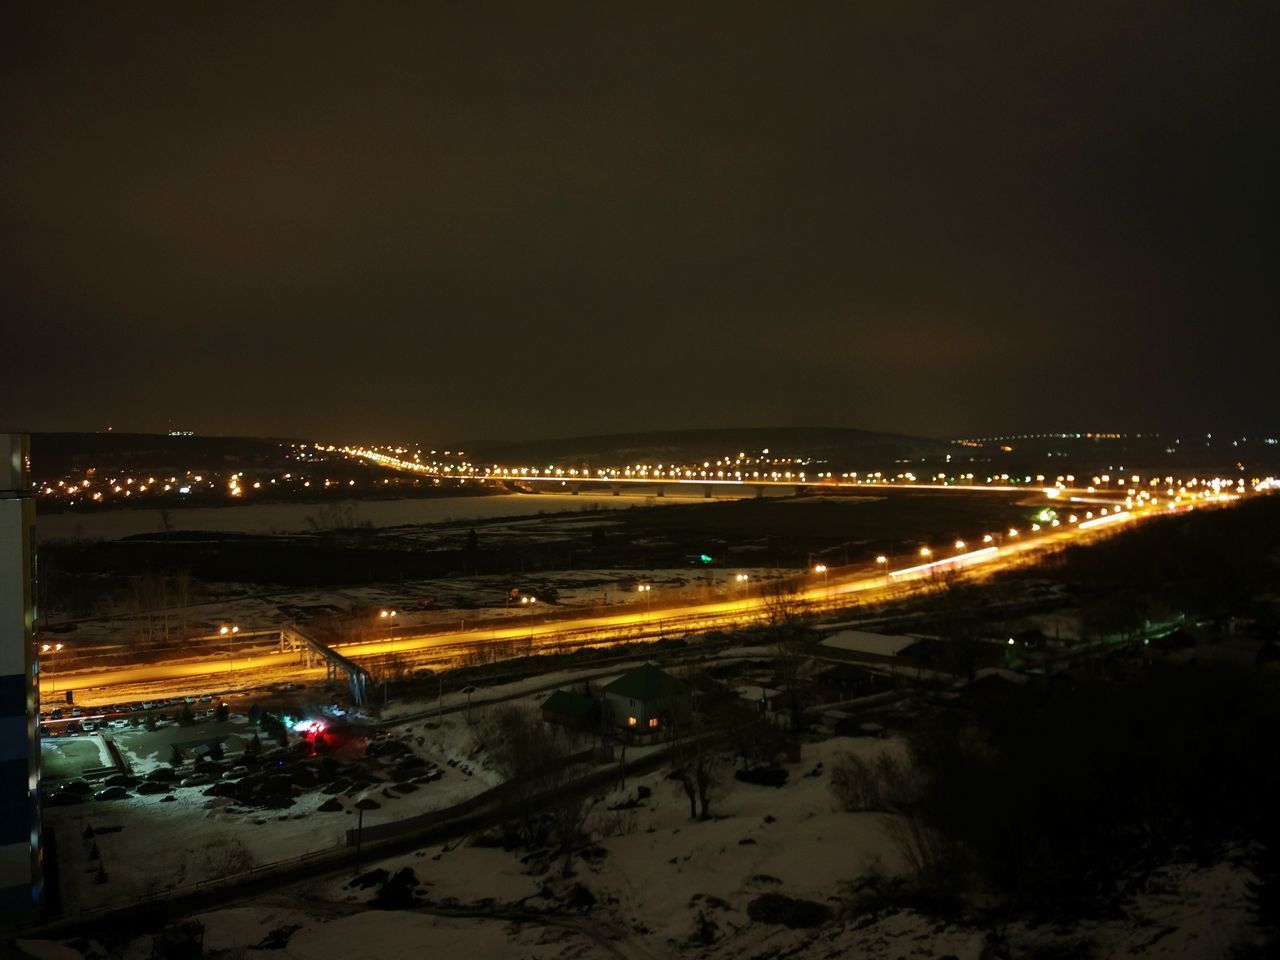 AERIAL VIEW OF ILLUMINATED CITY AT NIGHT